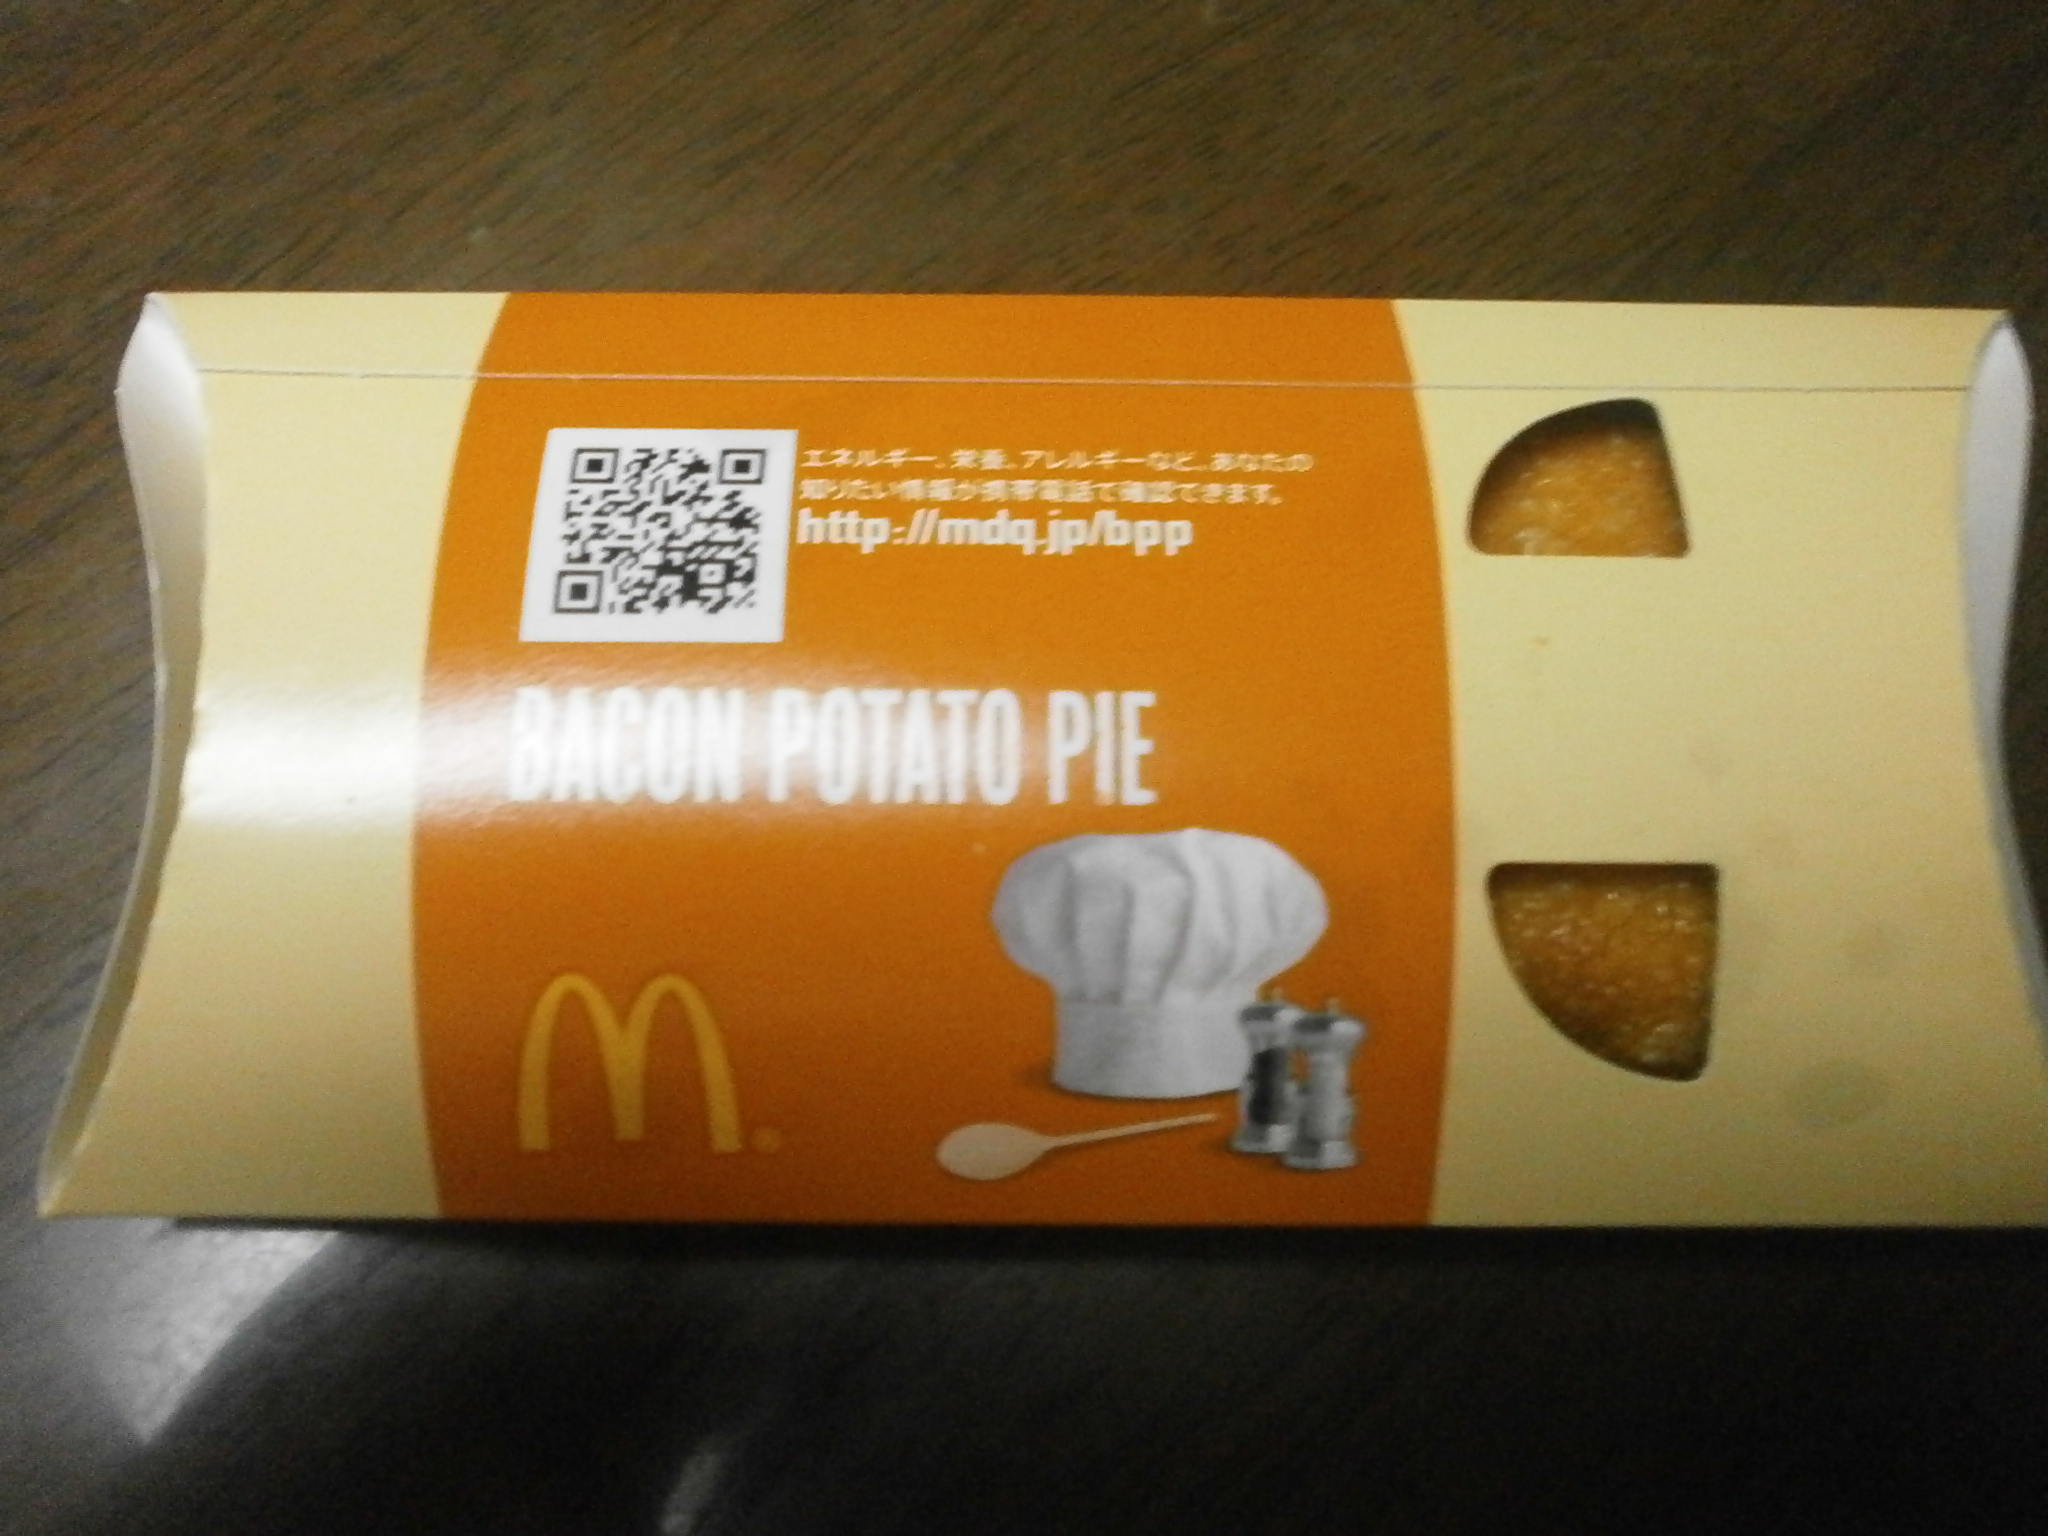 Bacon Potato Pie (McDonald)